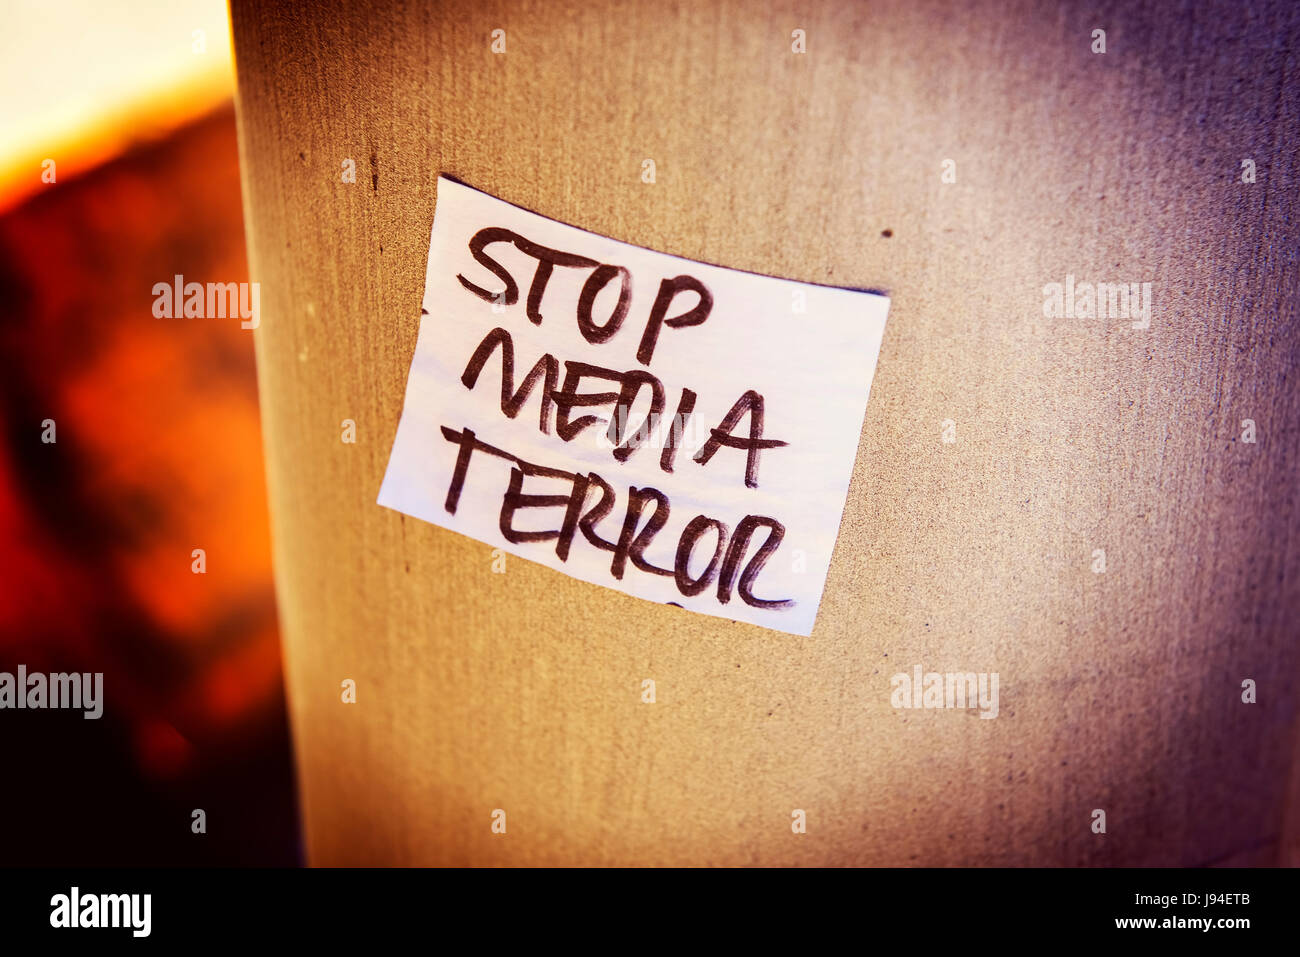 Stop media terror sticker in Hamburg, Germany Stock Photo